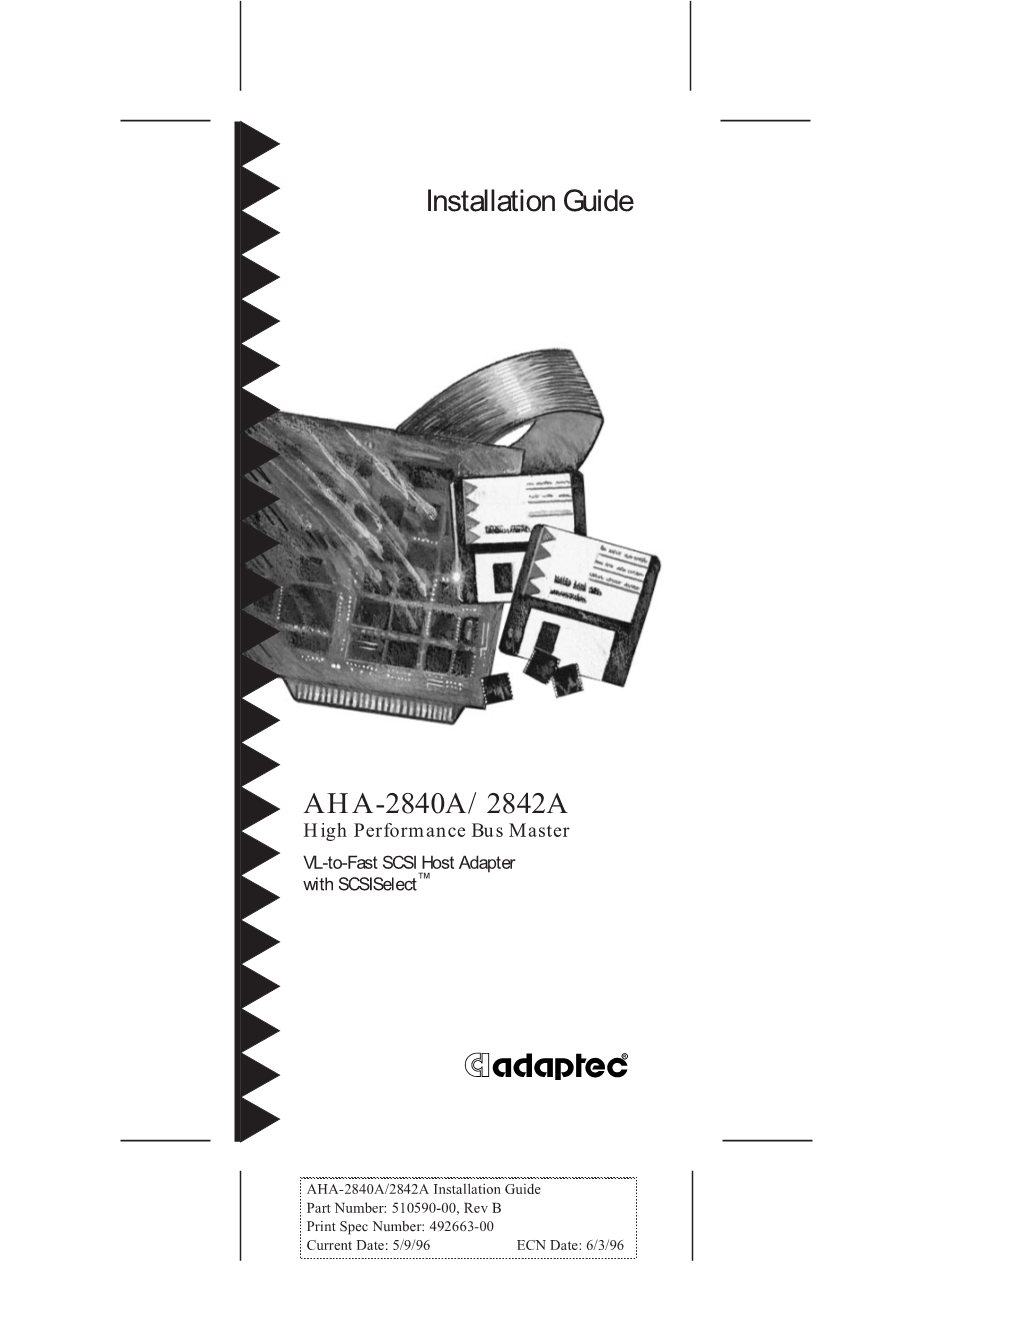 Installation Guide AHA-2840A/2842A